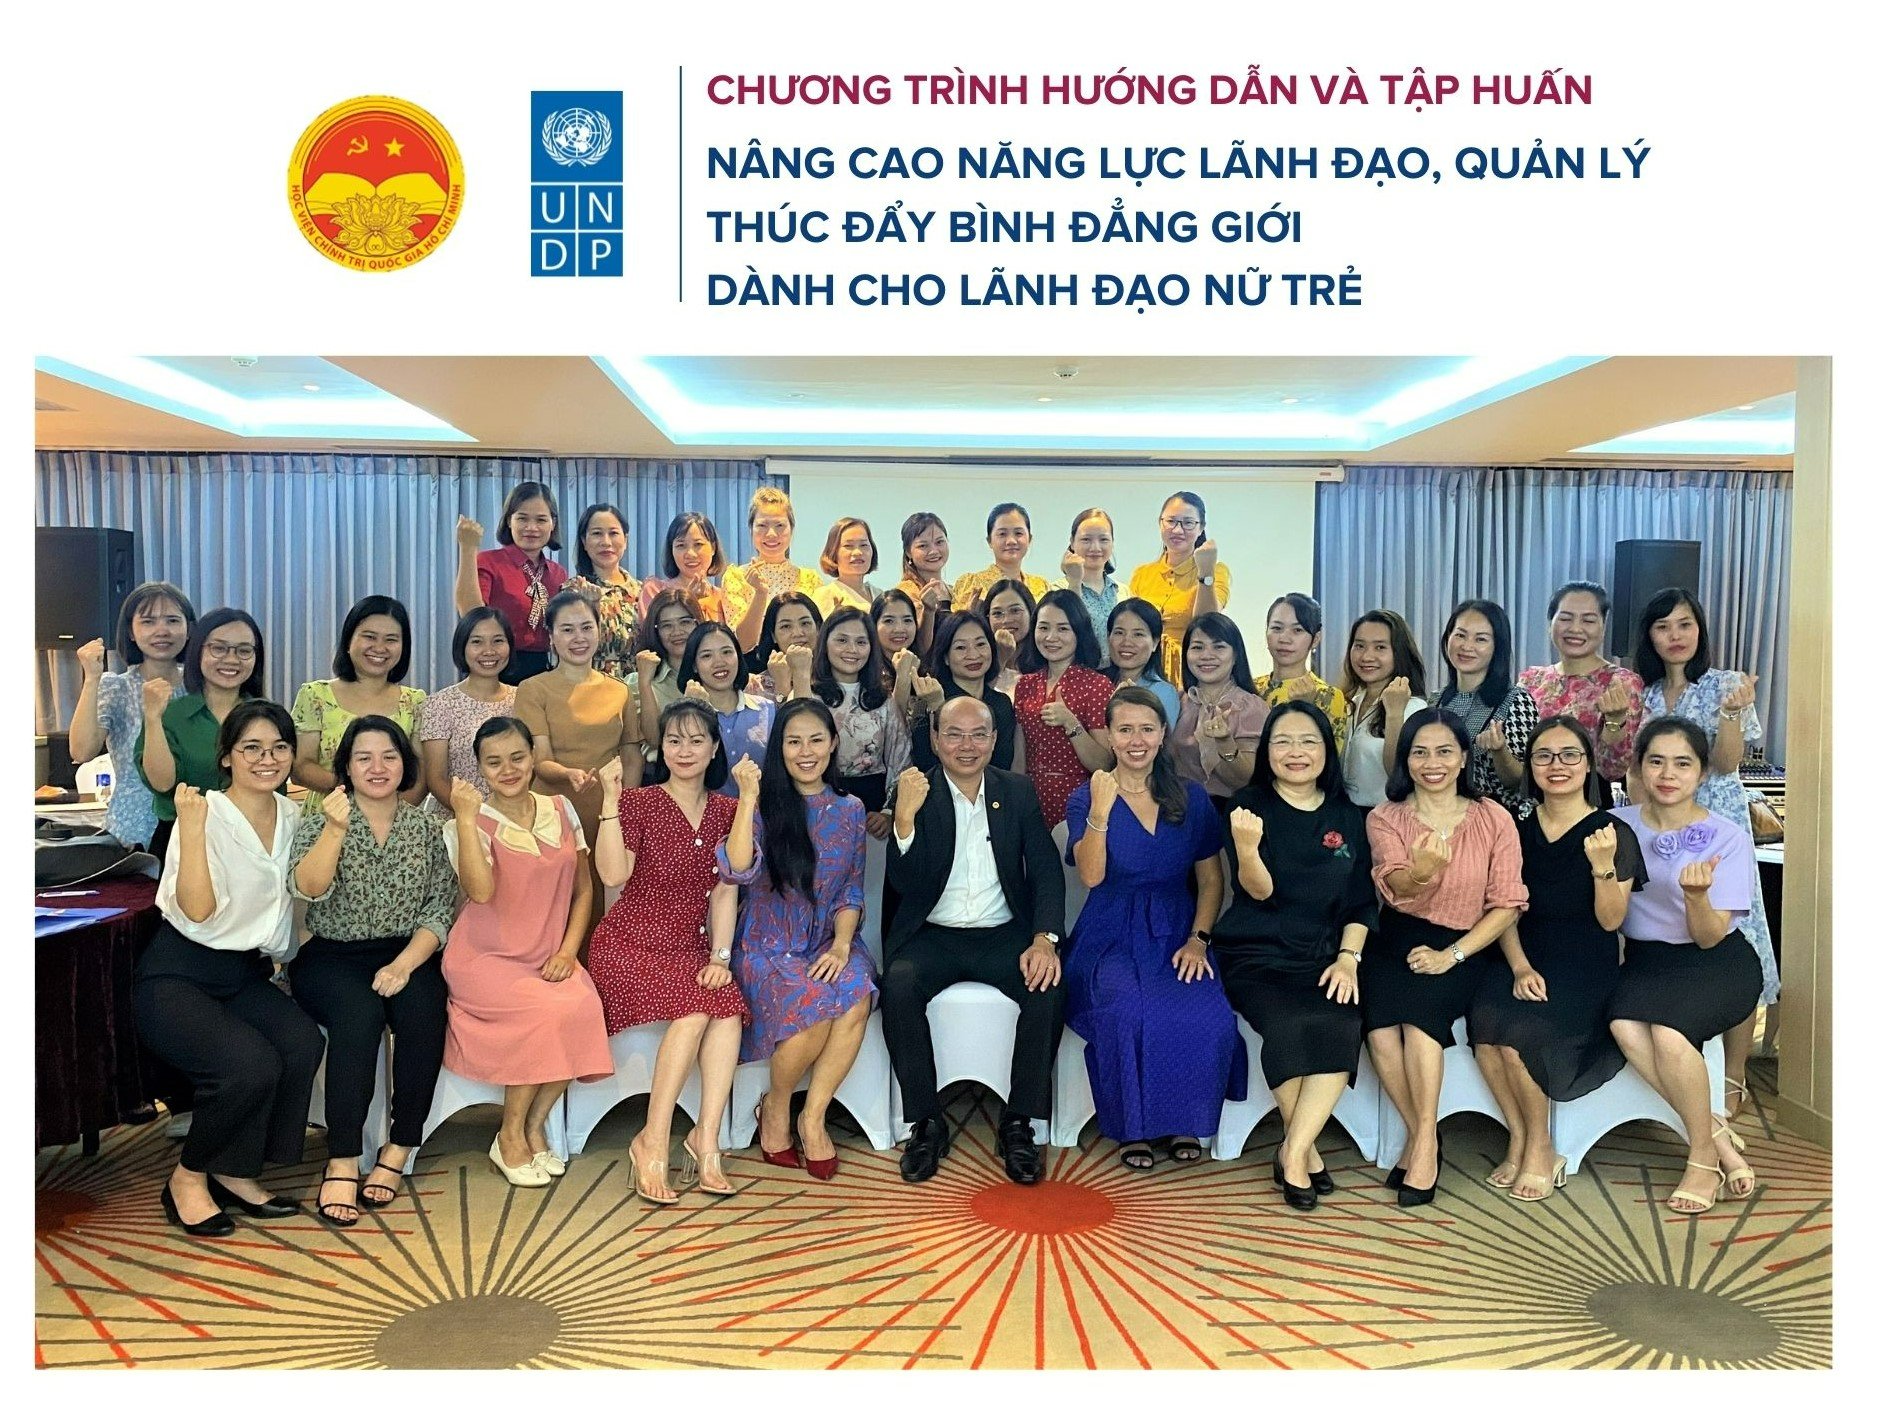 Viet Nam - UNDP: 45 Years of Partnership for Sustainable